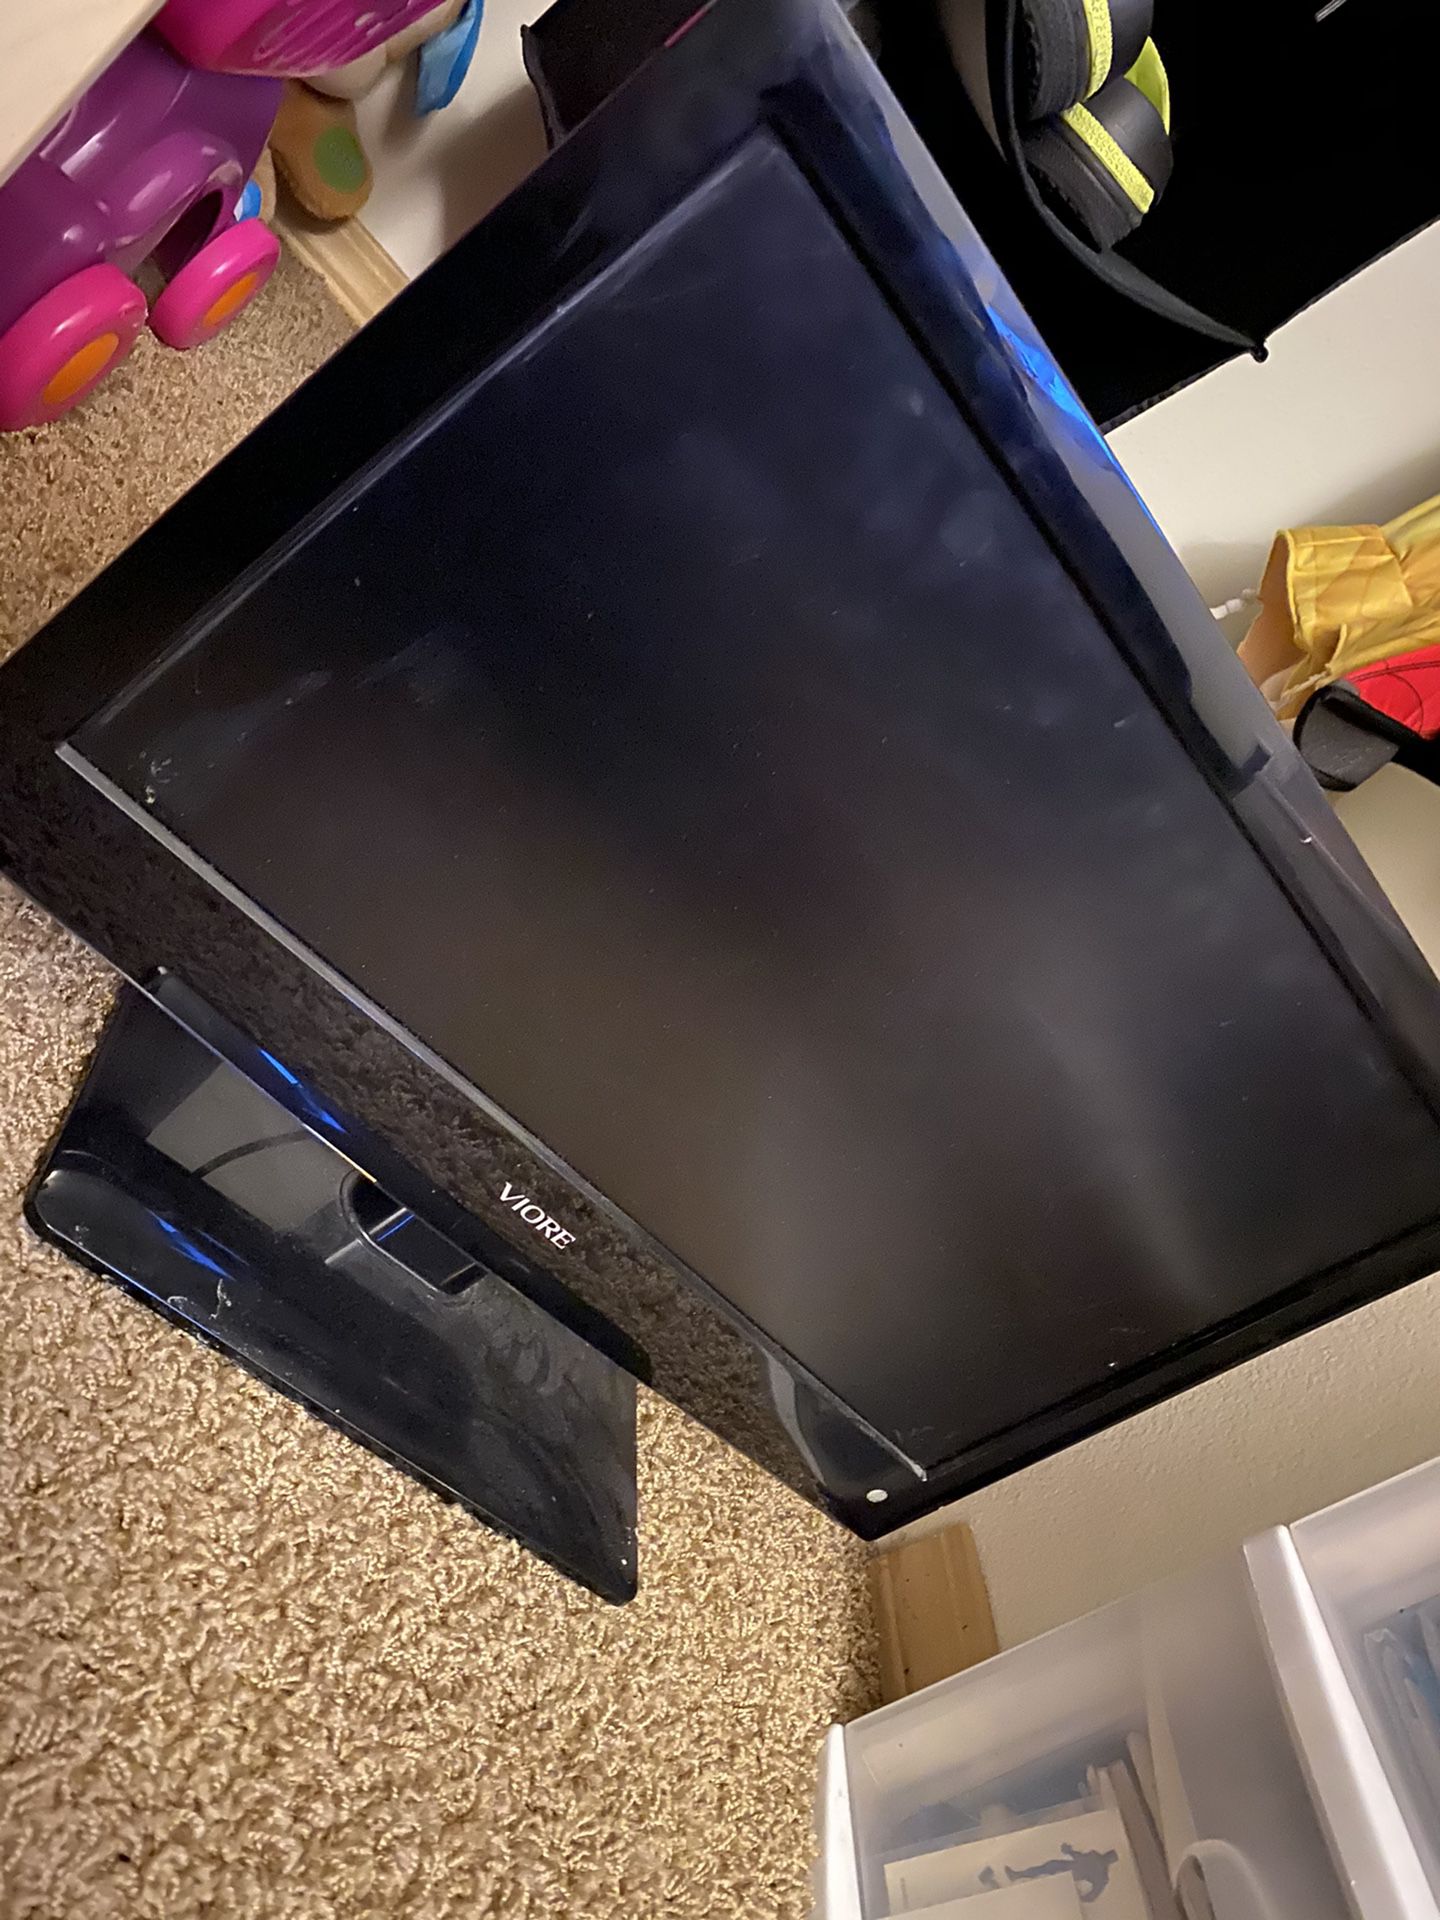 Small tv/computer monitor